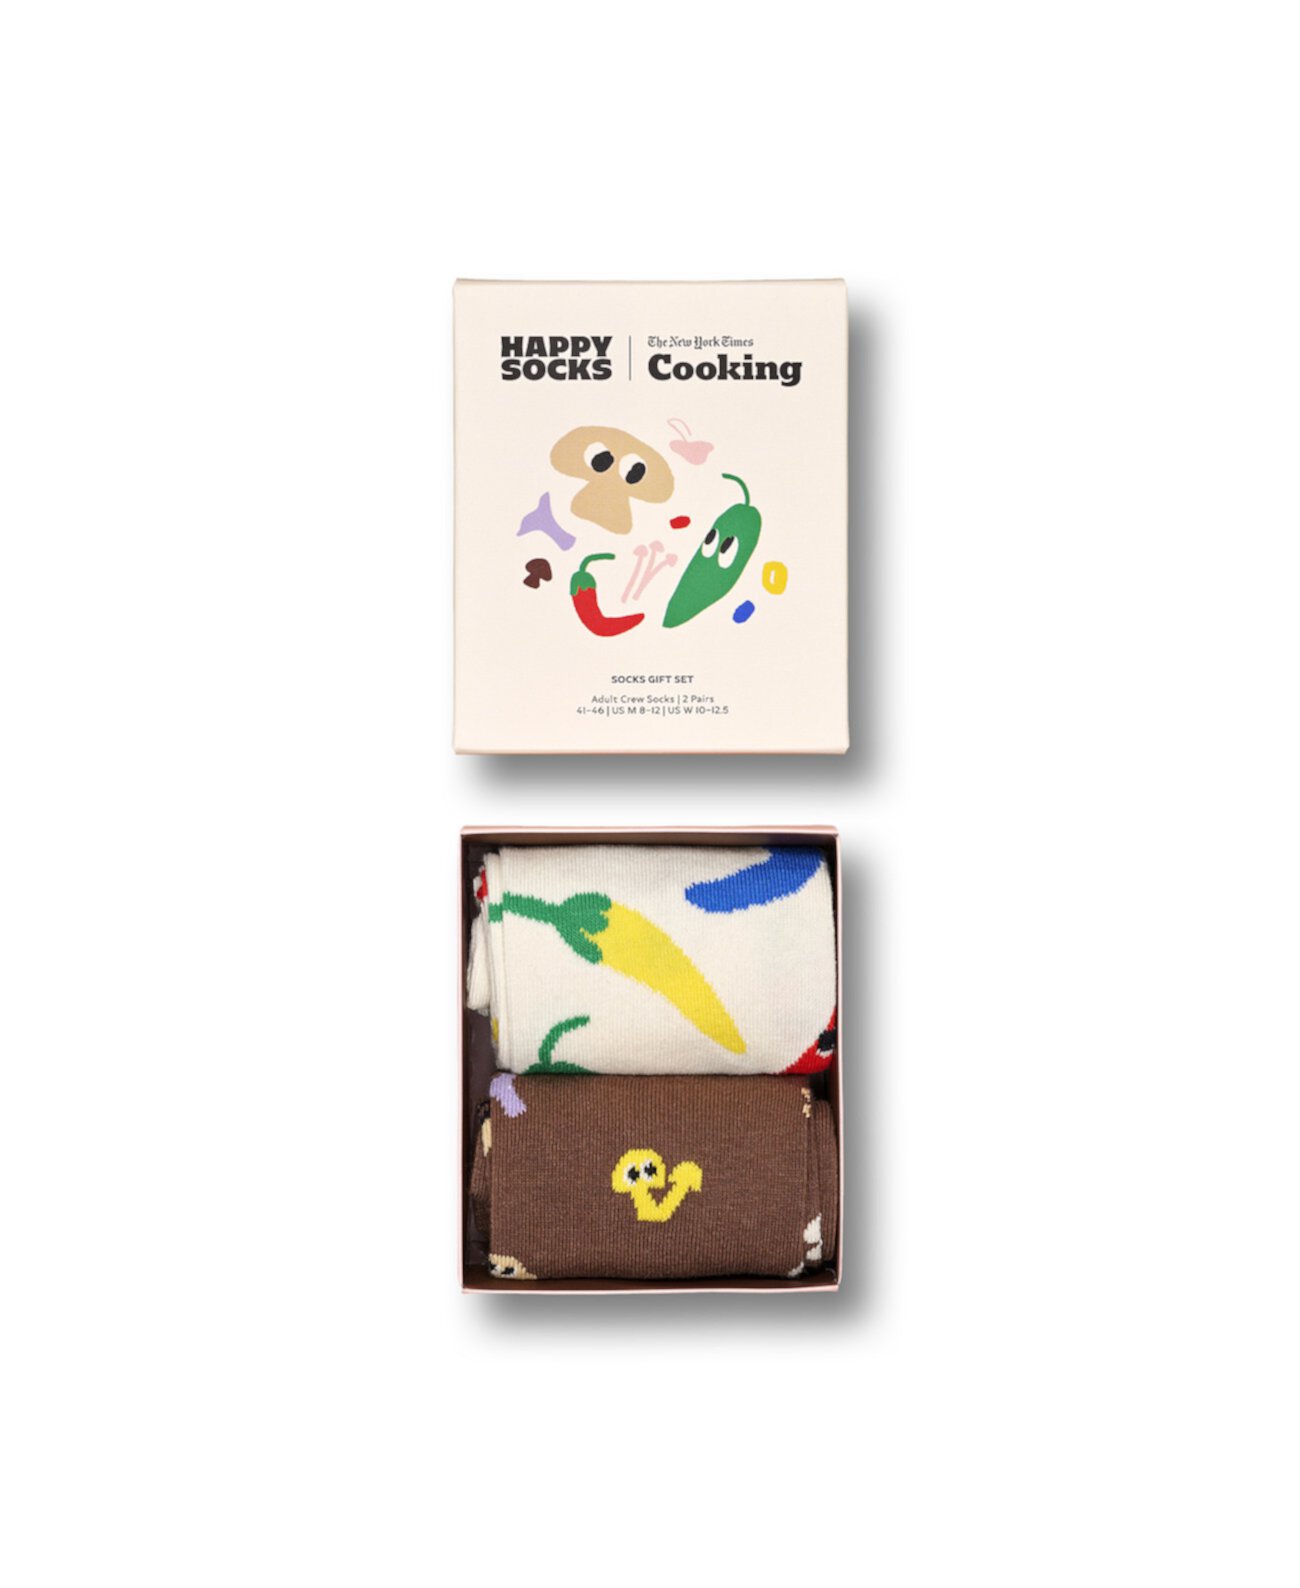 Мужские носки X New York Times Cooking Hothead and Fun Guy Guy, подарок, упаковка из 2 шт. Happy Socks